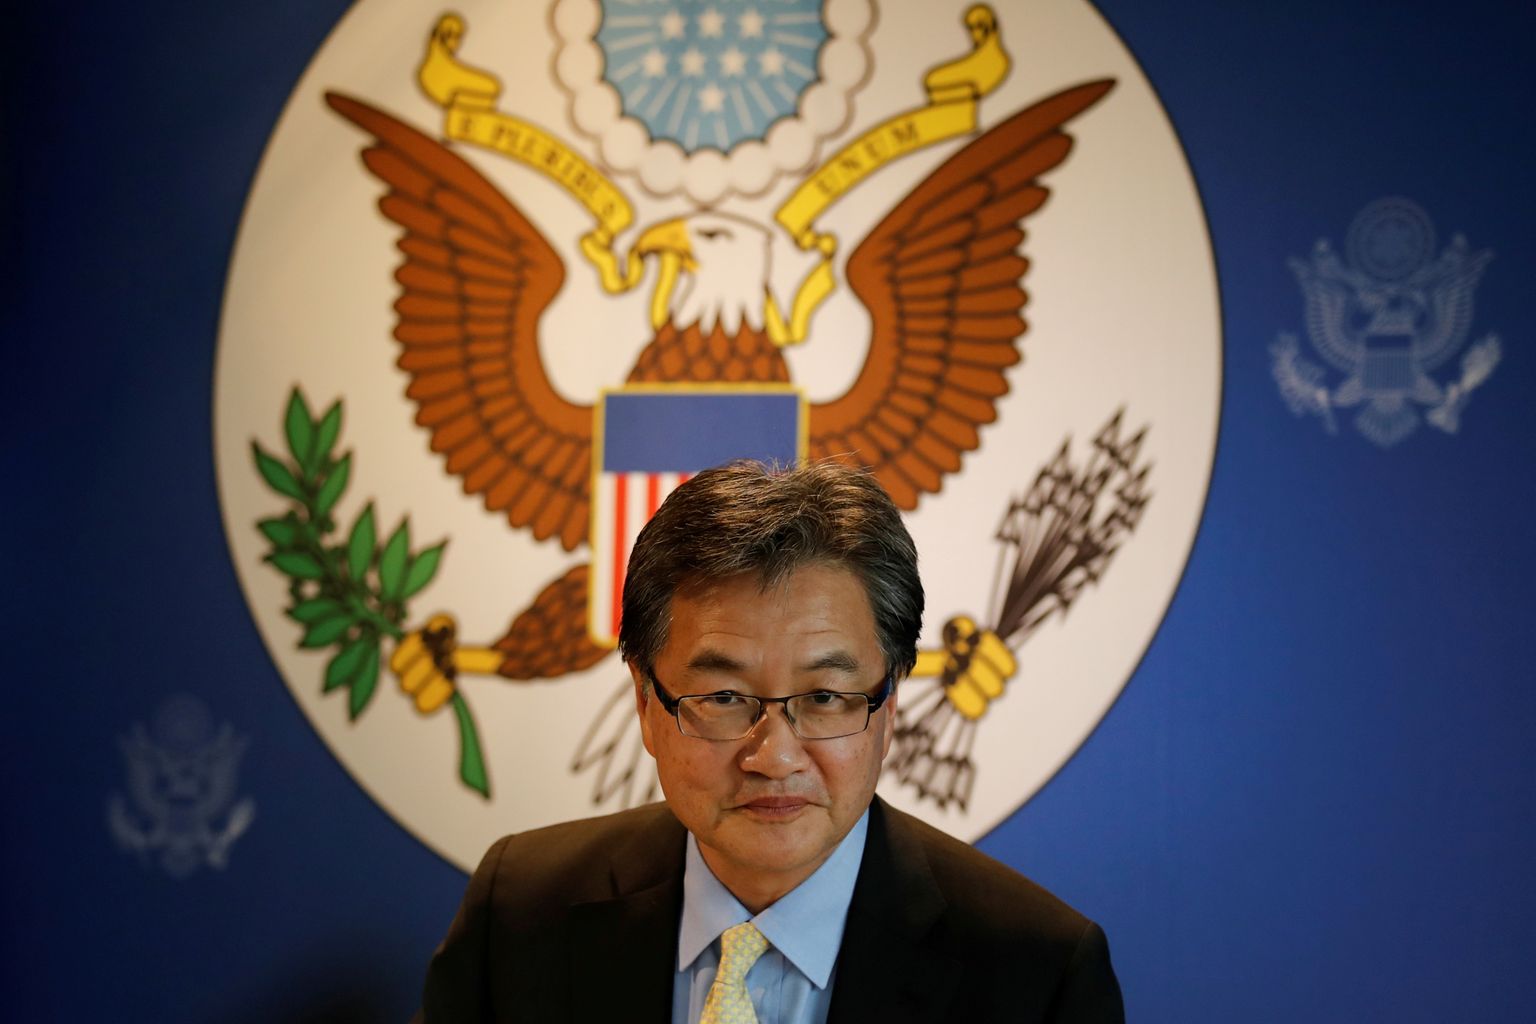 USA endine eriesindaja Põhja-Korea küsimustes Joseph Yun 2017. aasta detsembris Tais.